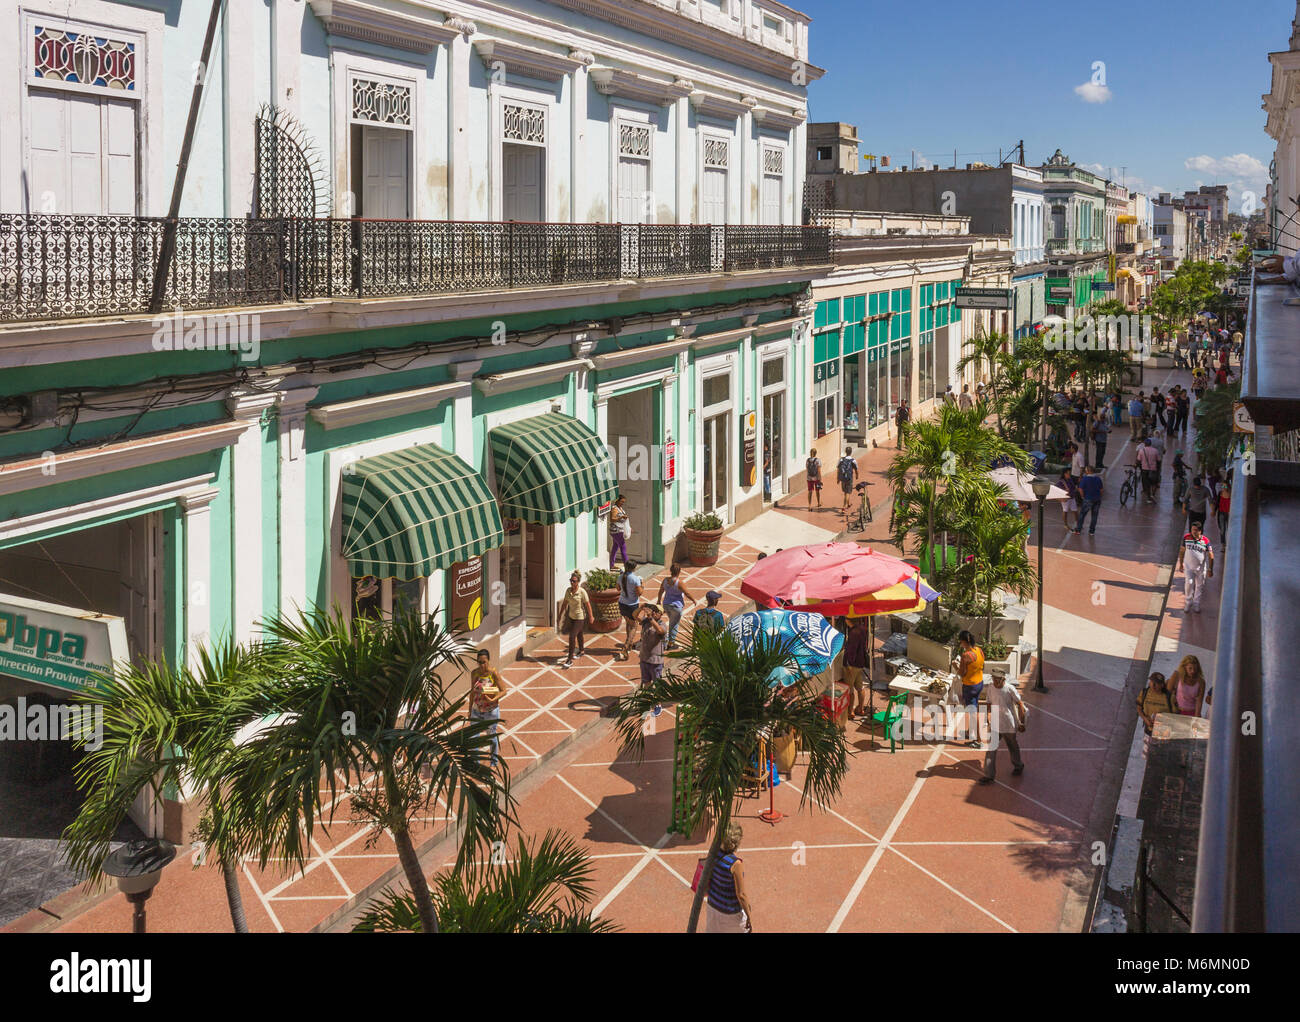 View from balcony of El Bulevar pedestrian street, Cienfuegos, Cuba Stock Photo